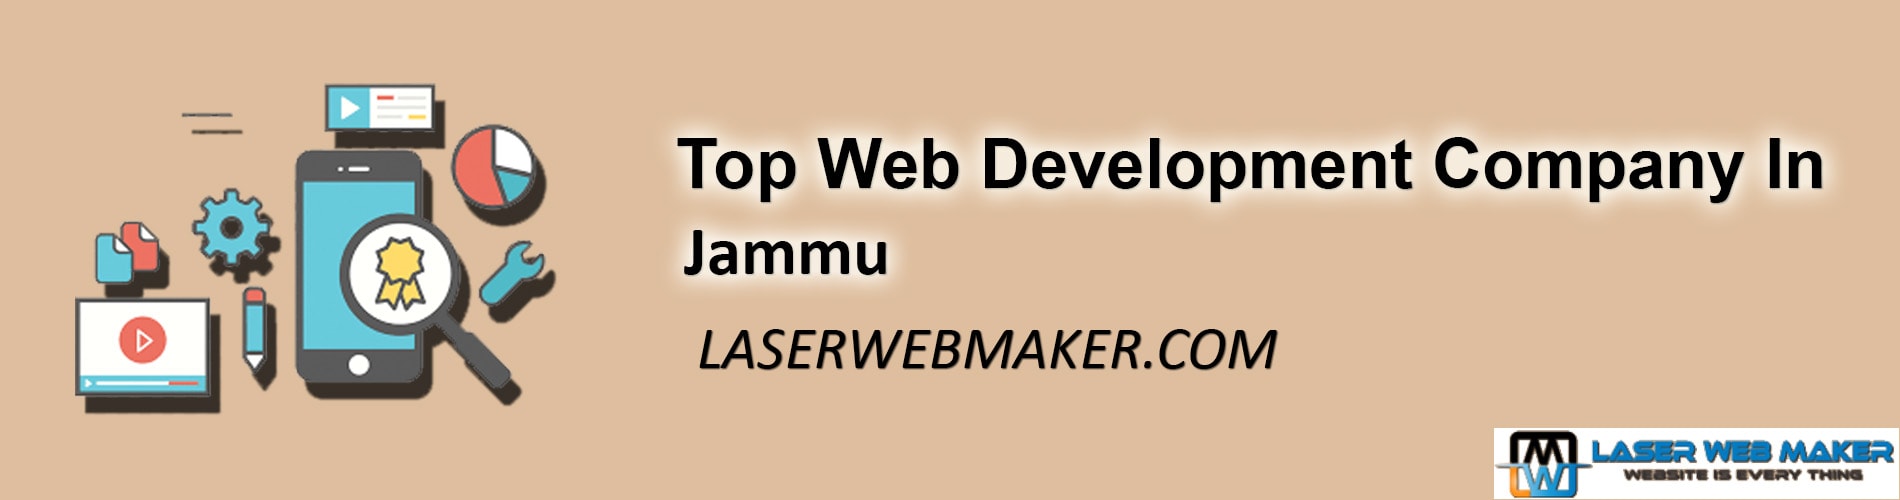 Top Web Development Company In Jammu